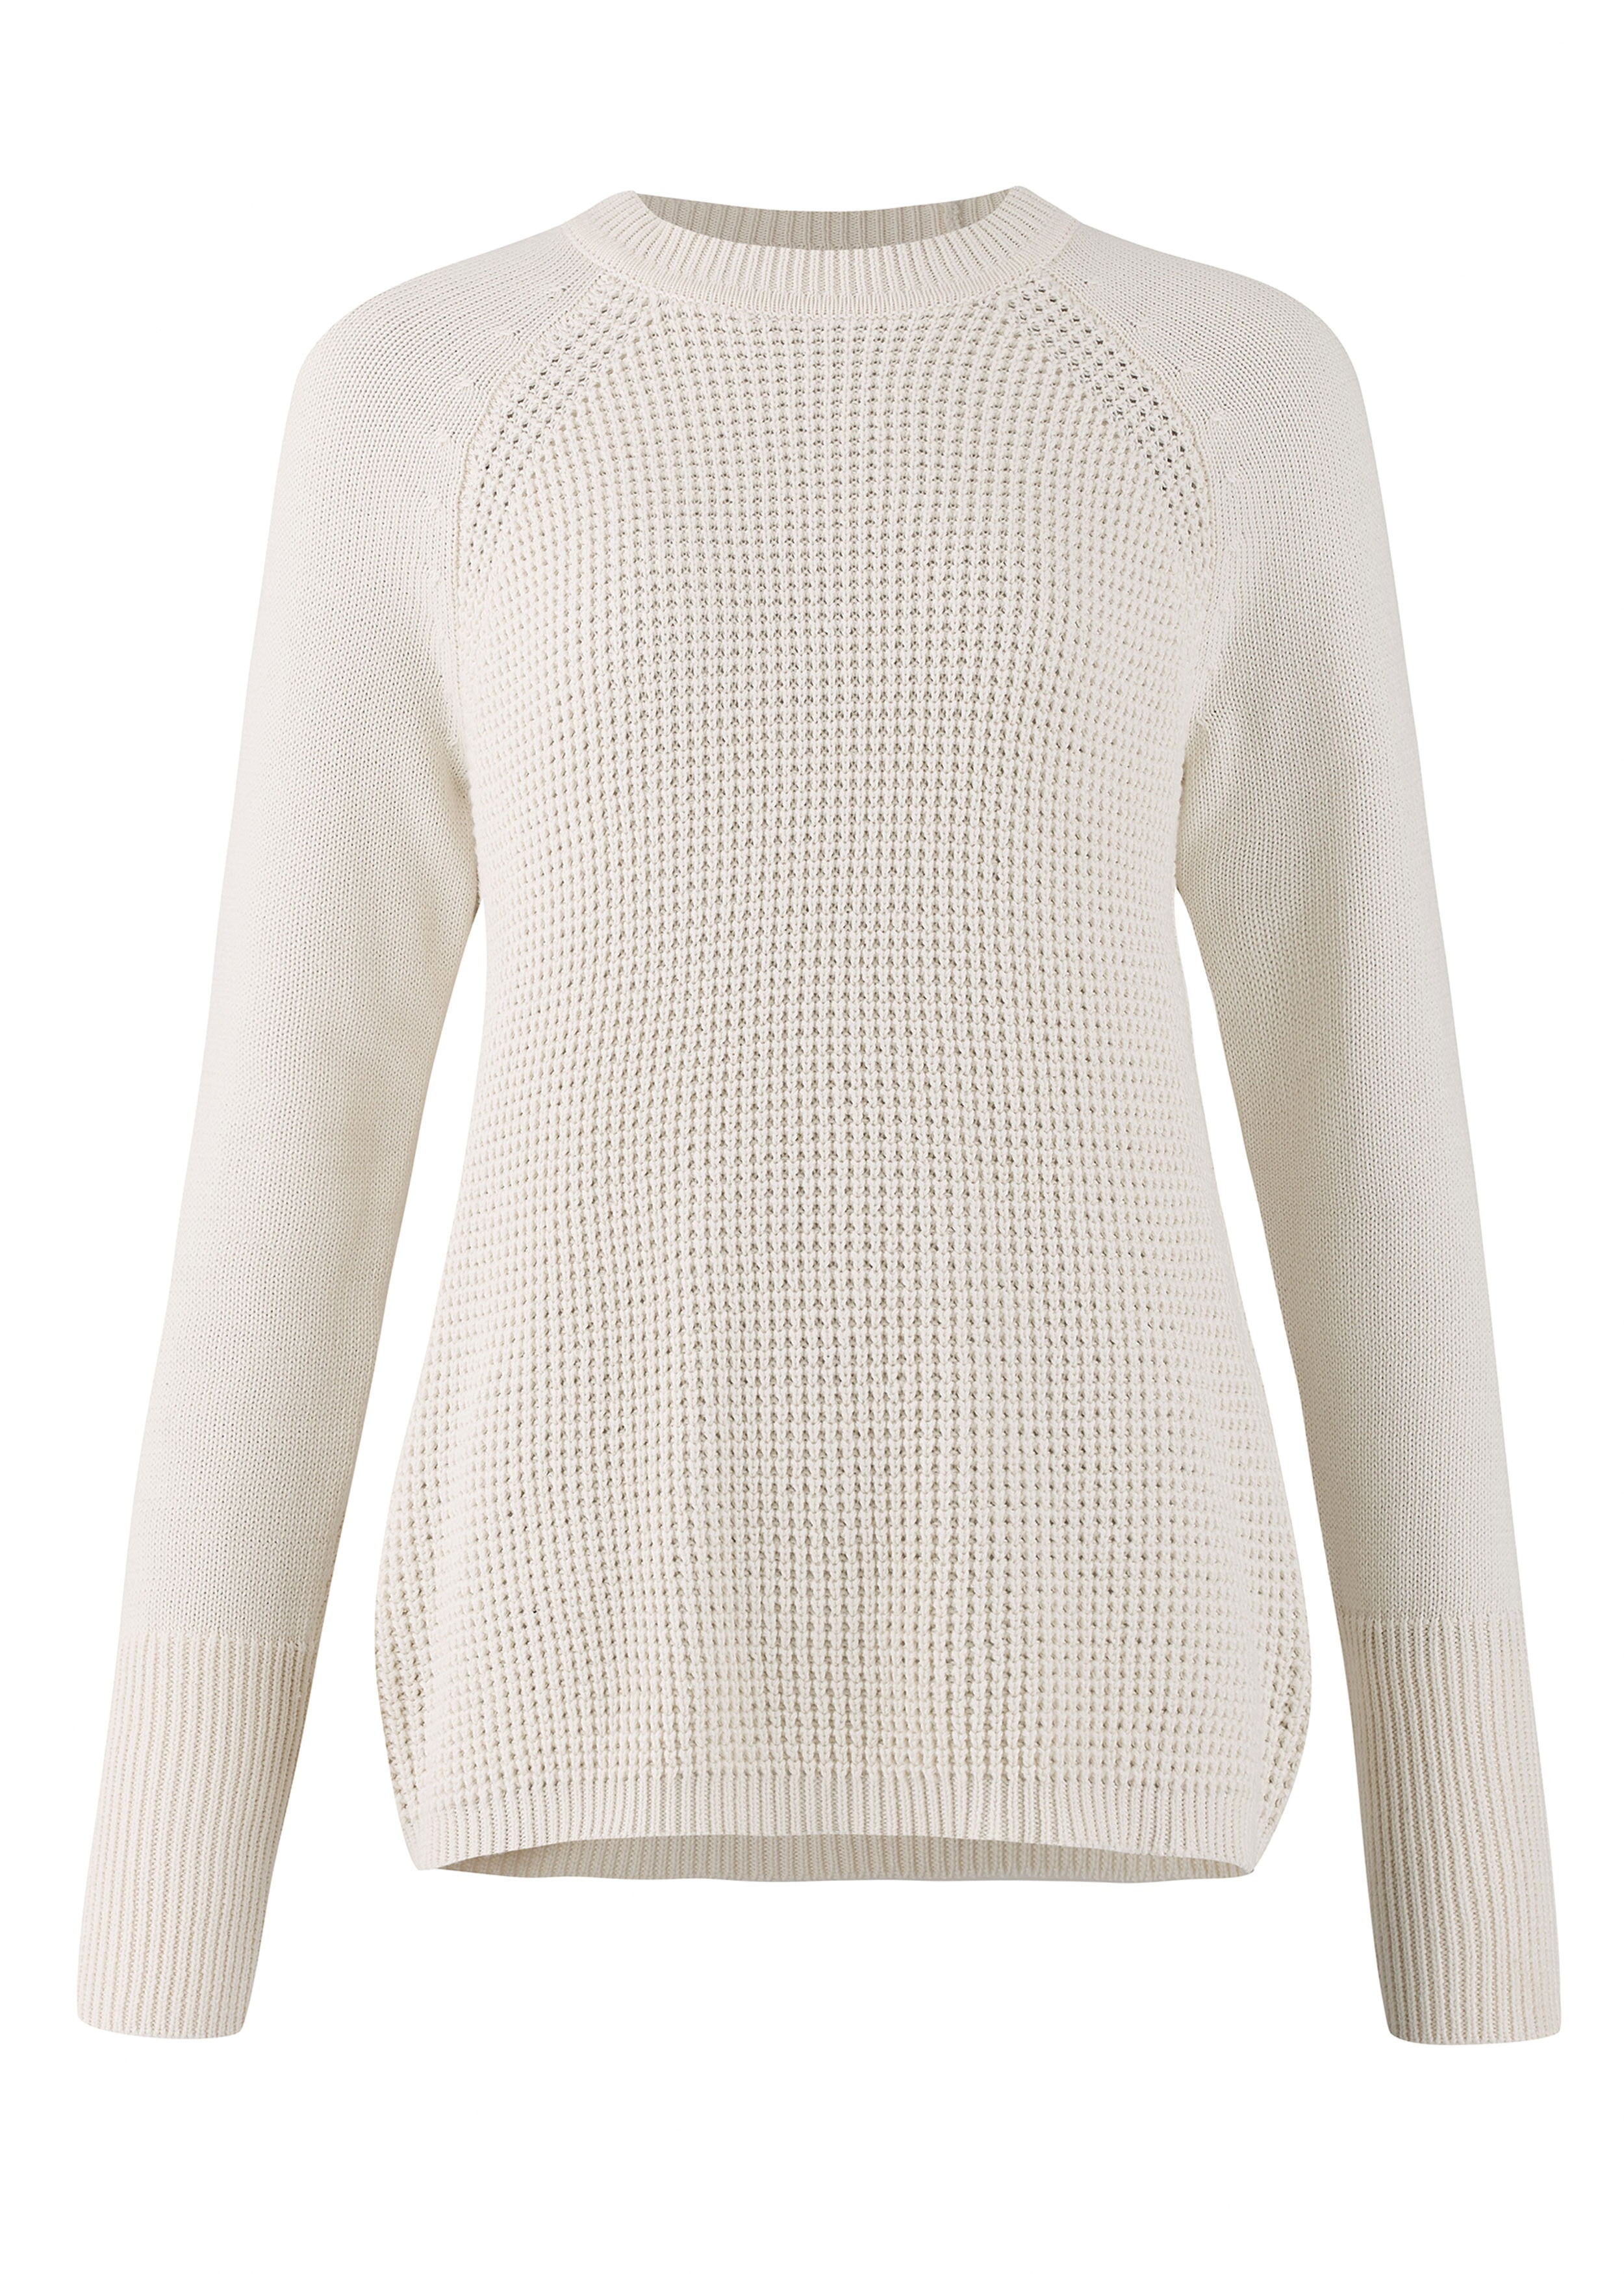 Cotton Open Back Sweater Soft White